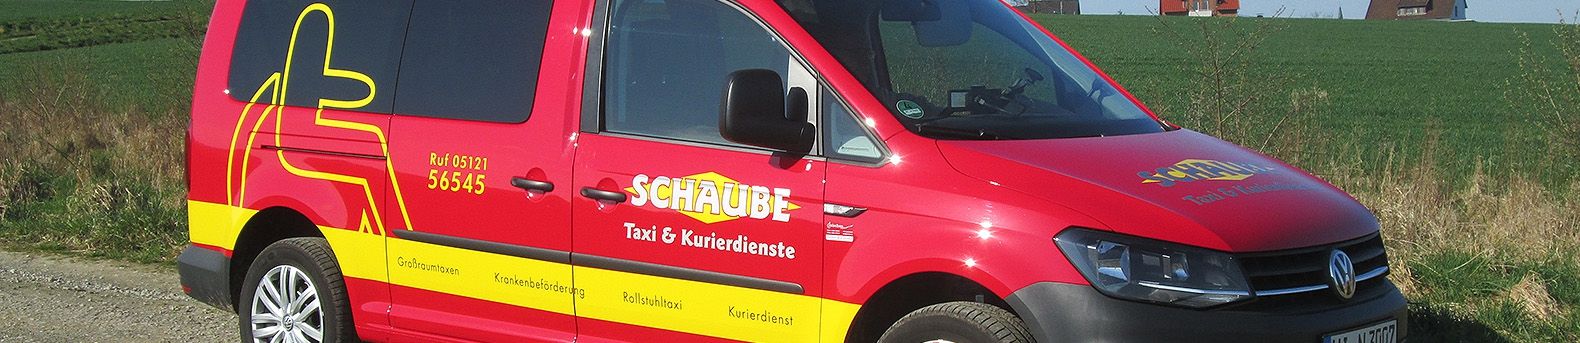 taxi-hildesheim-schaube-header taxi